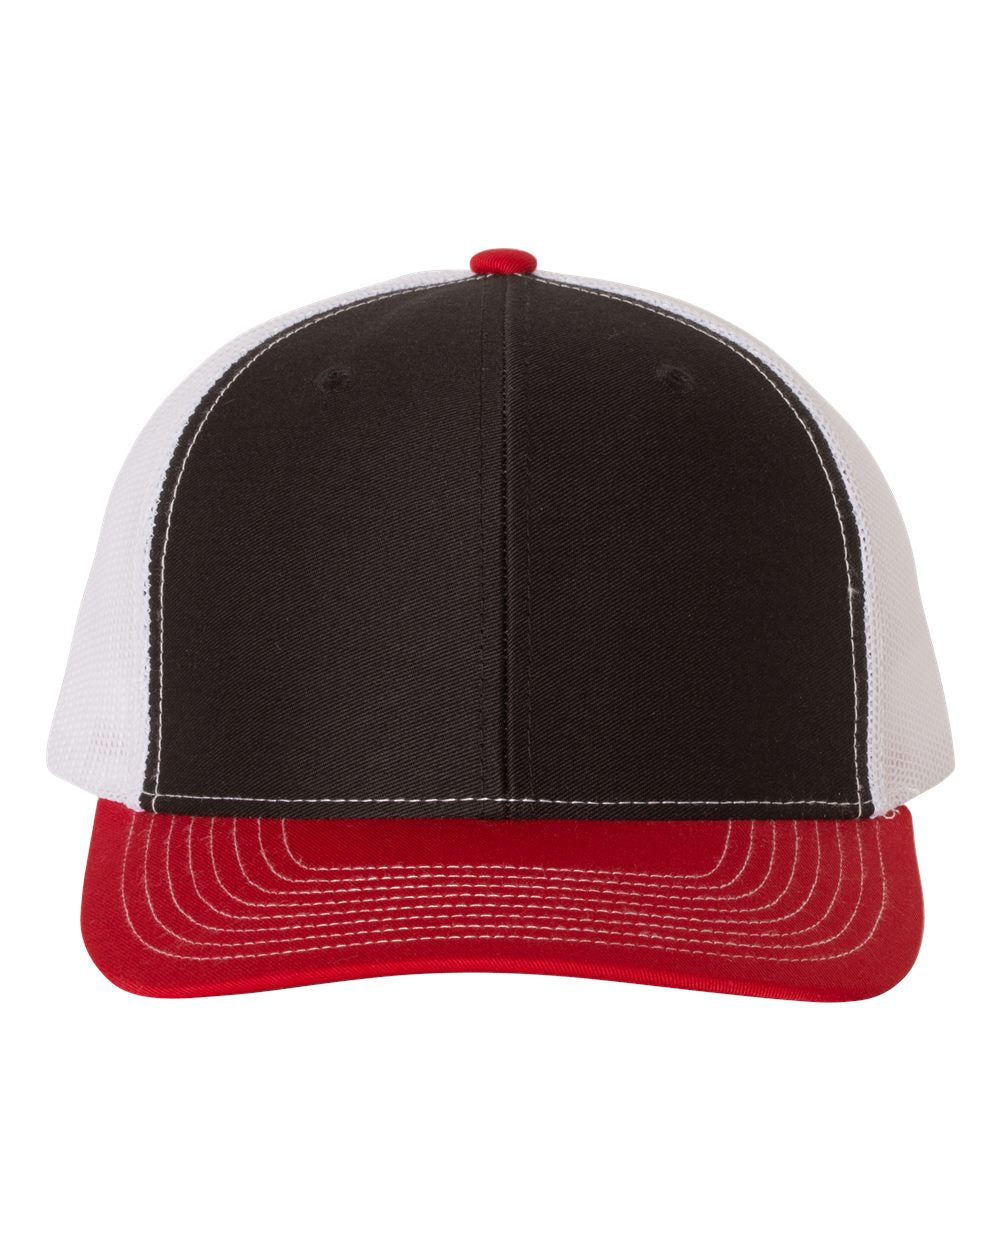 Custom Richardson 112 Leather Patch Hat